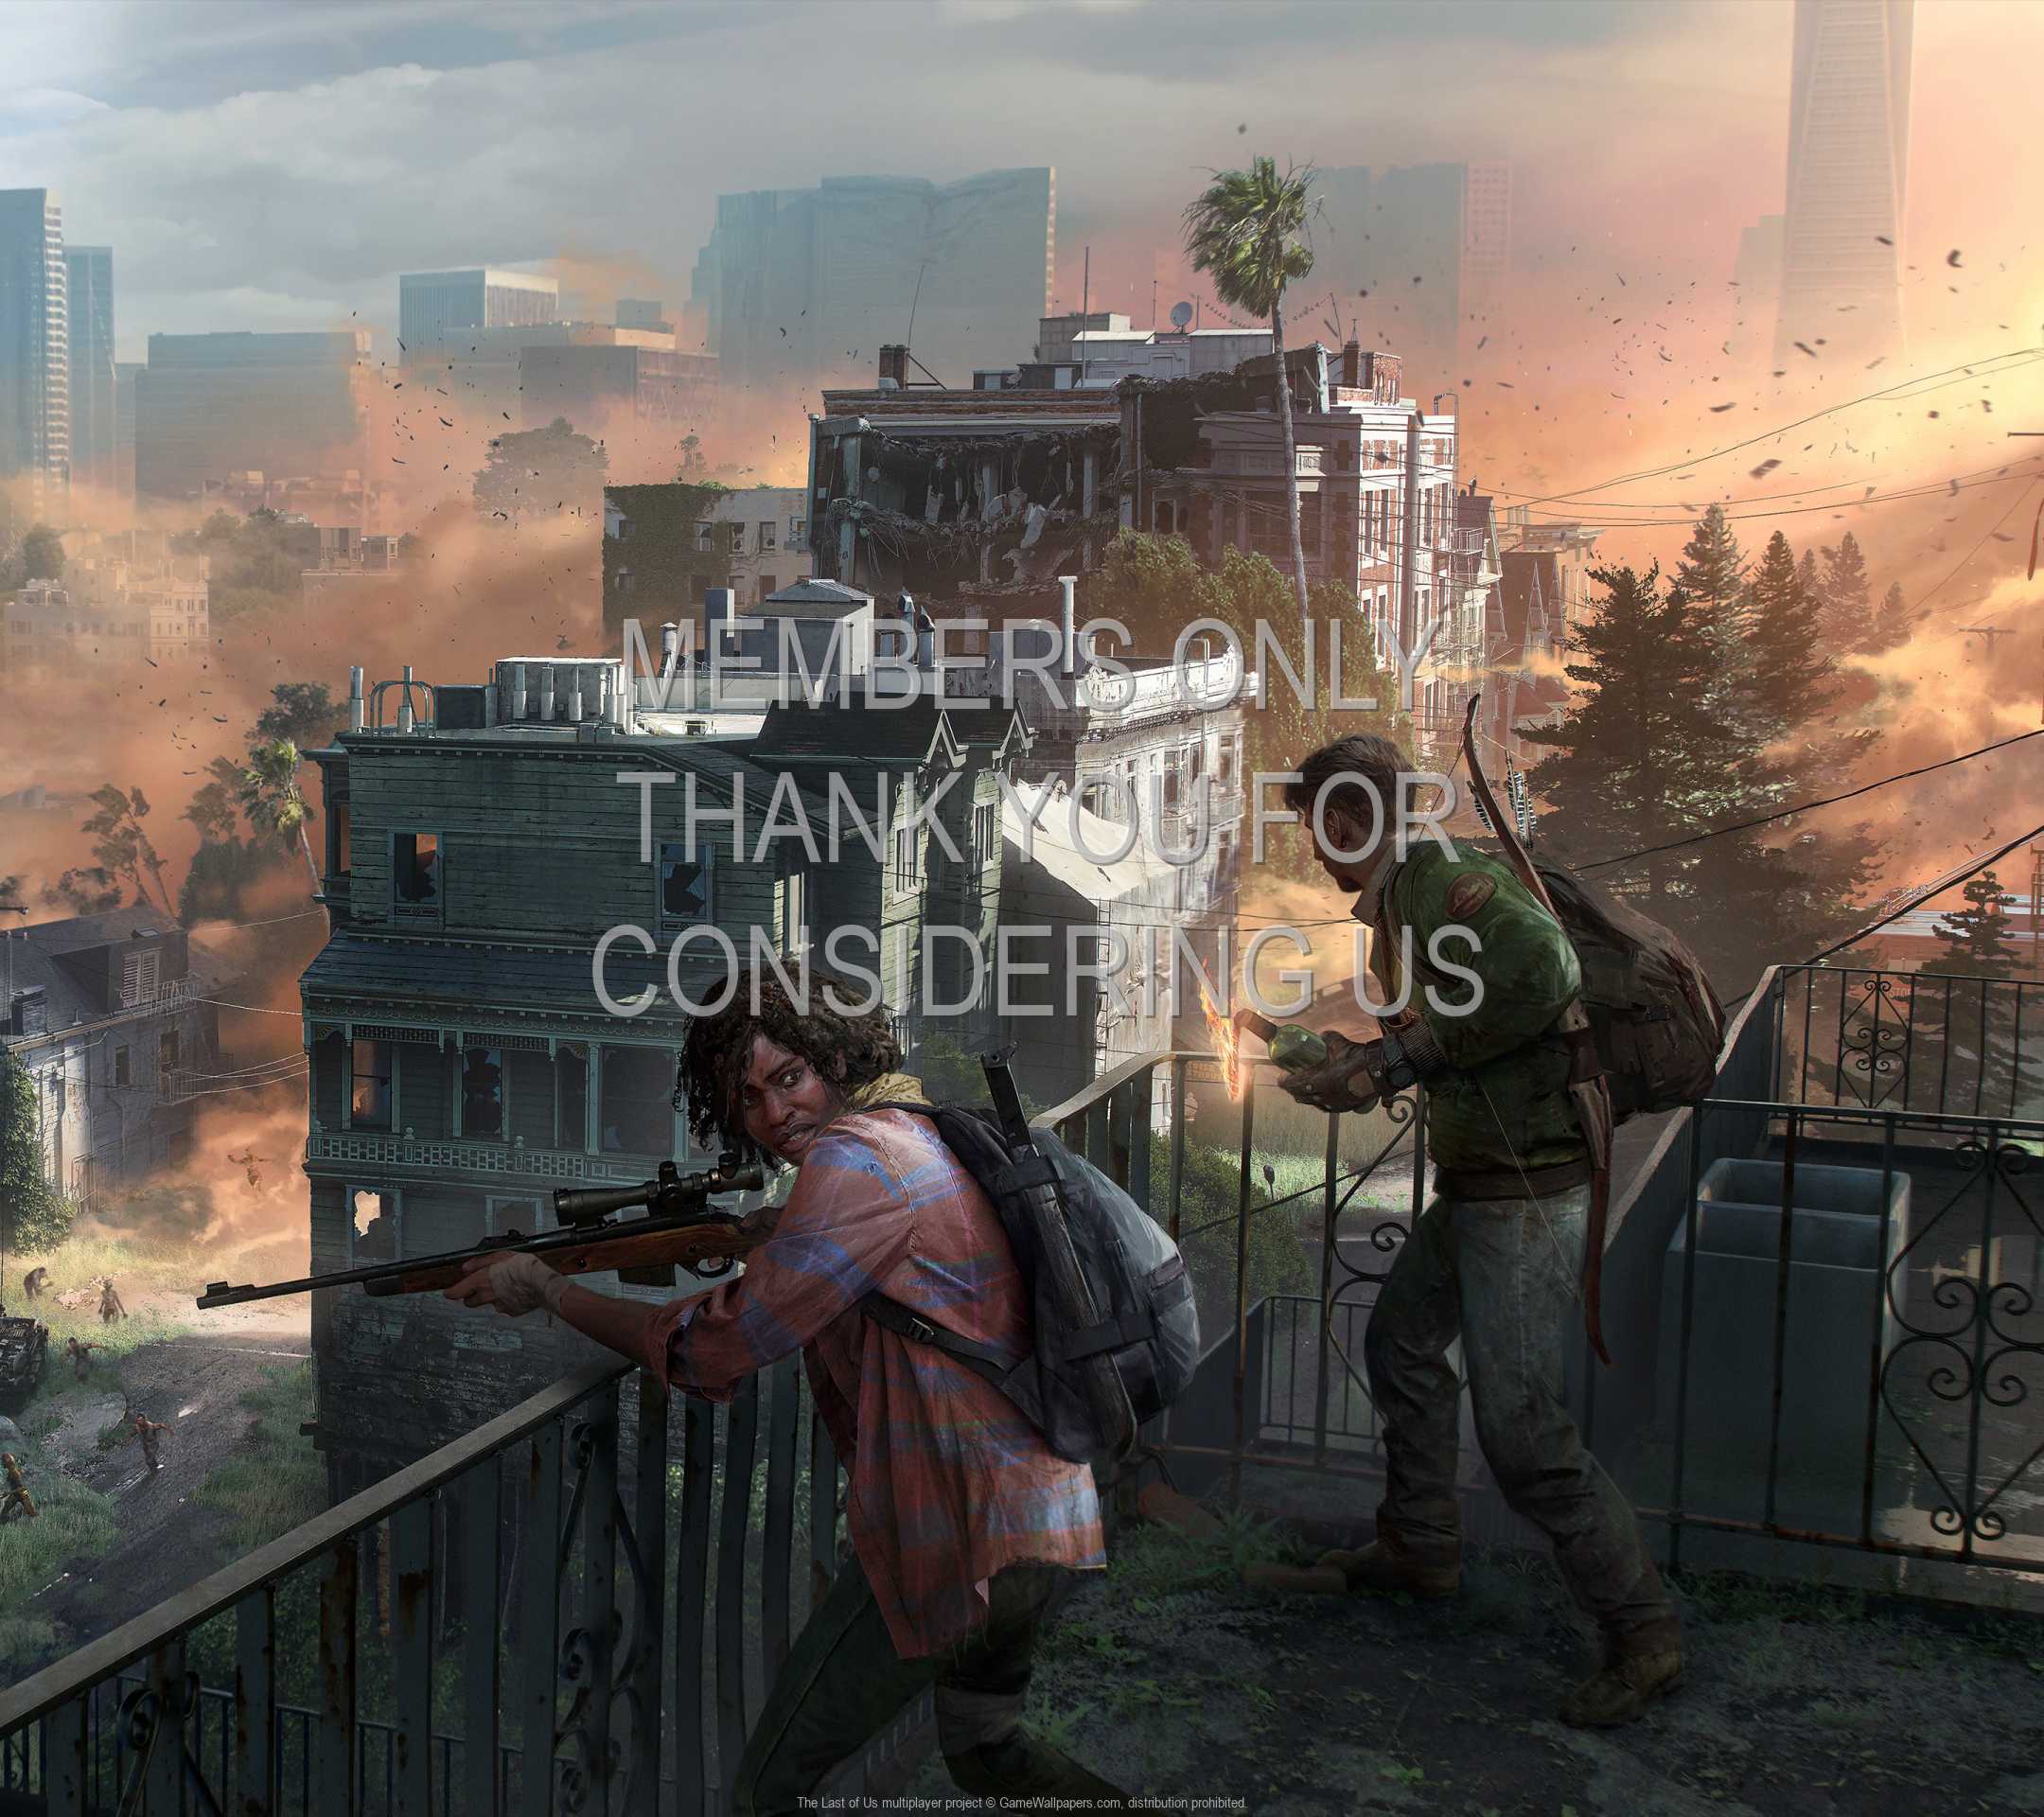 The Last of Us multiplayer project 1080p Horizontal Mobile fond d'écran 01